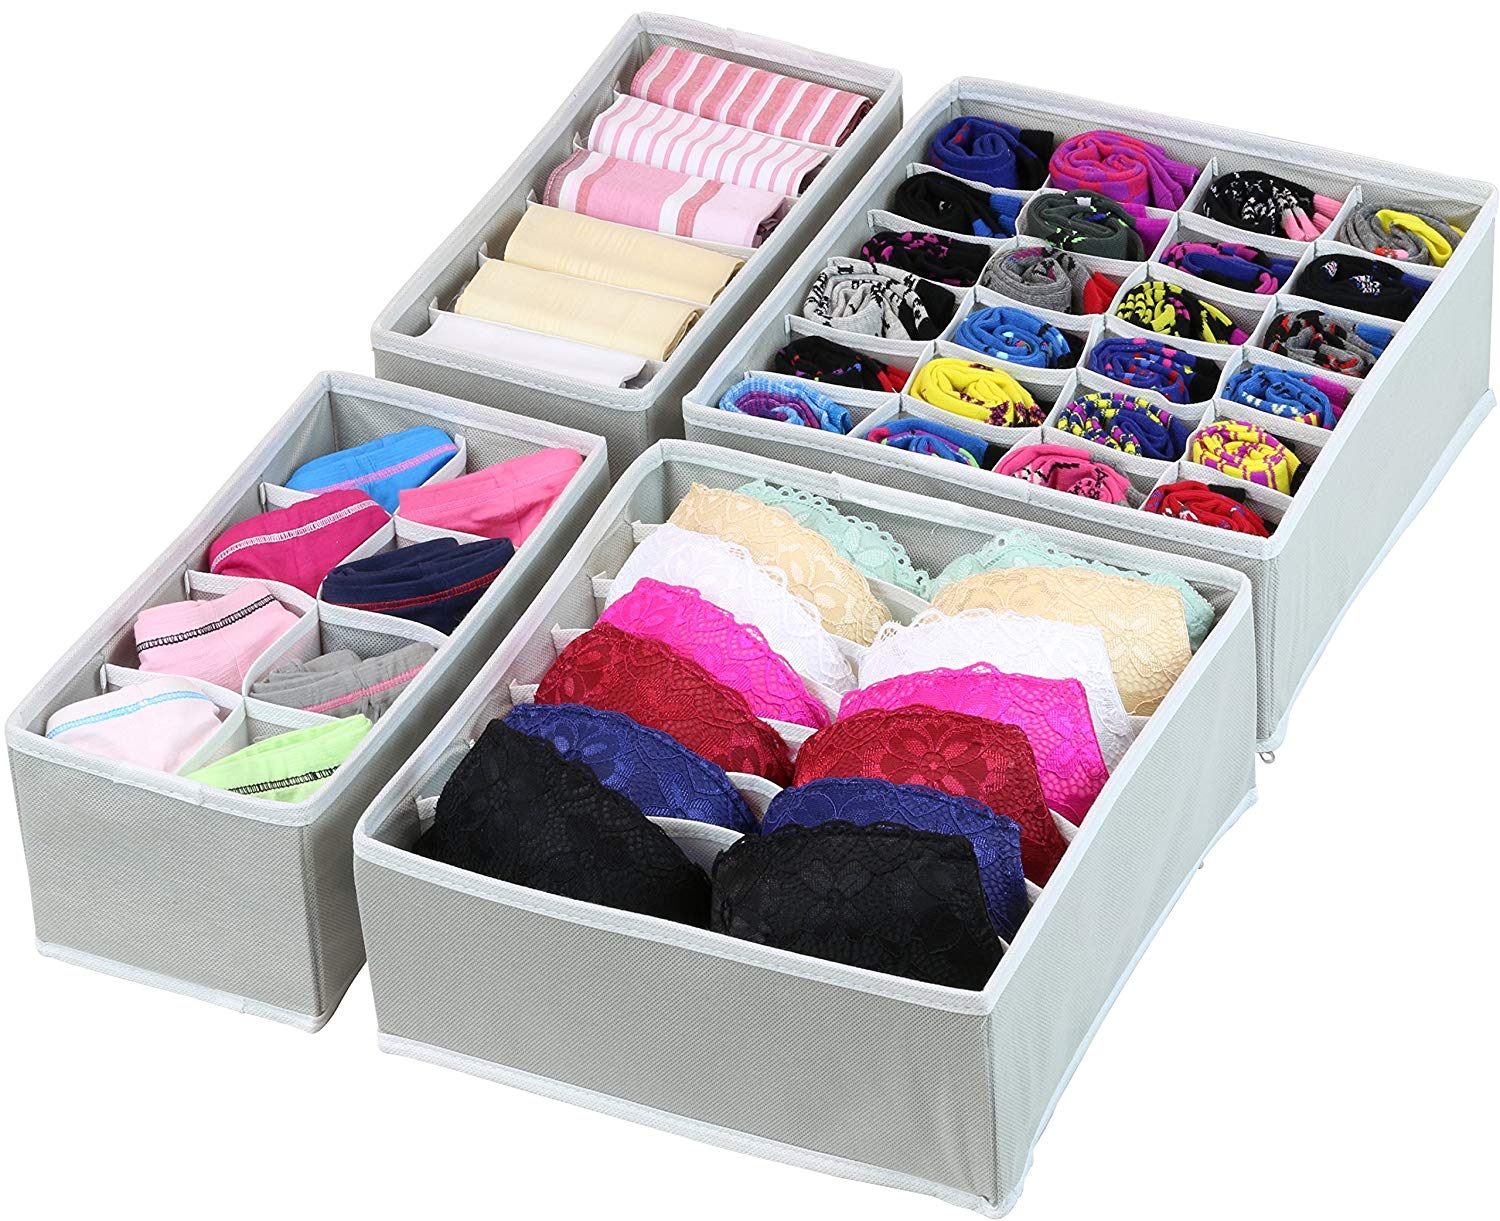 SimpleHouseware Closet Underwear Organizer Drawer Divider 4 Set, Gray - image 2 of 7